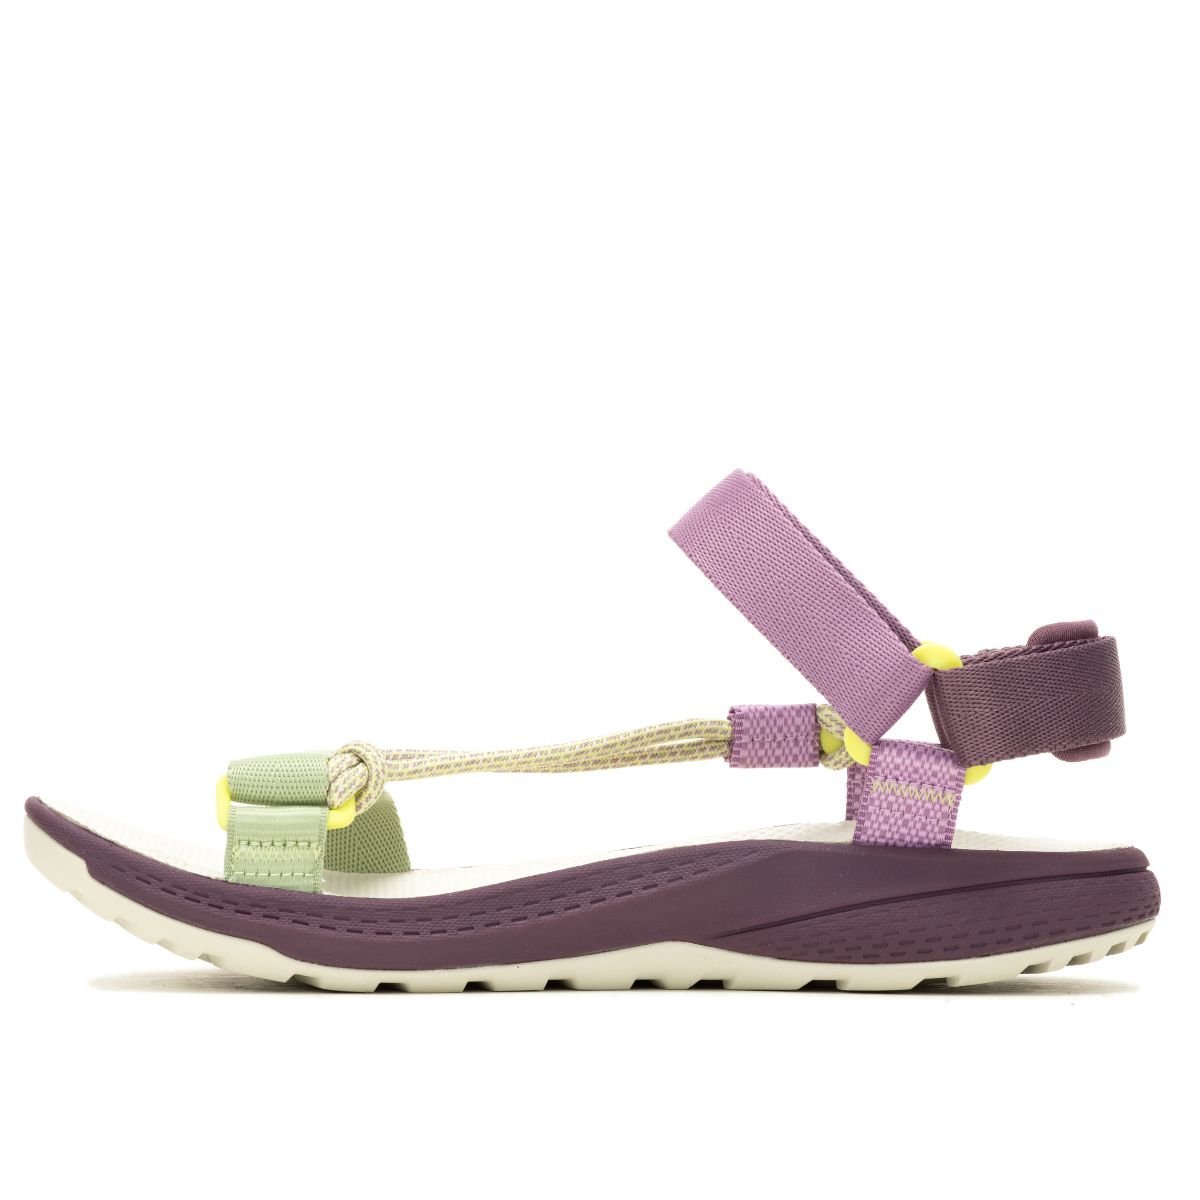 Topánky Merrell Bravada 2 Multi Strap W - purple